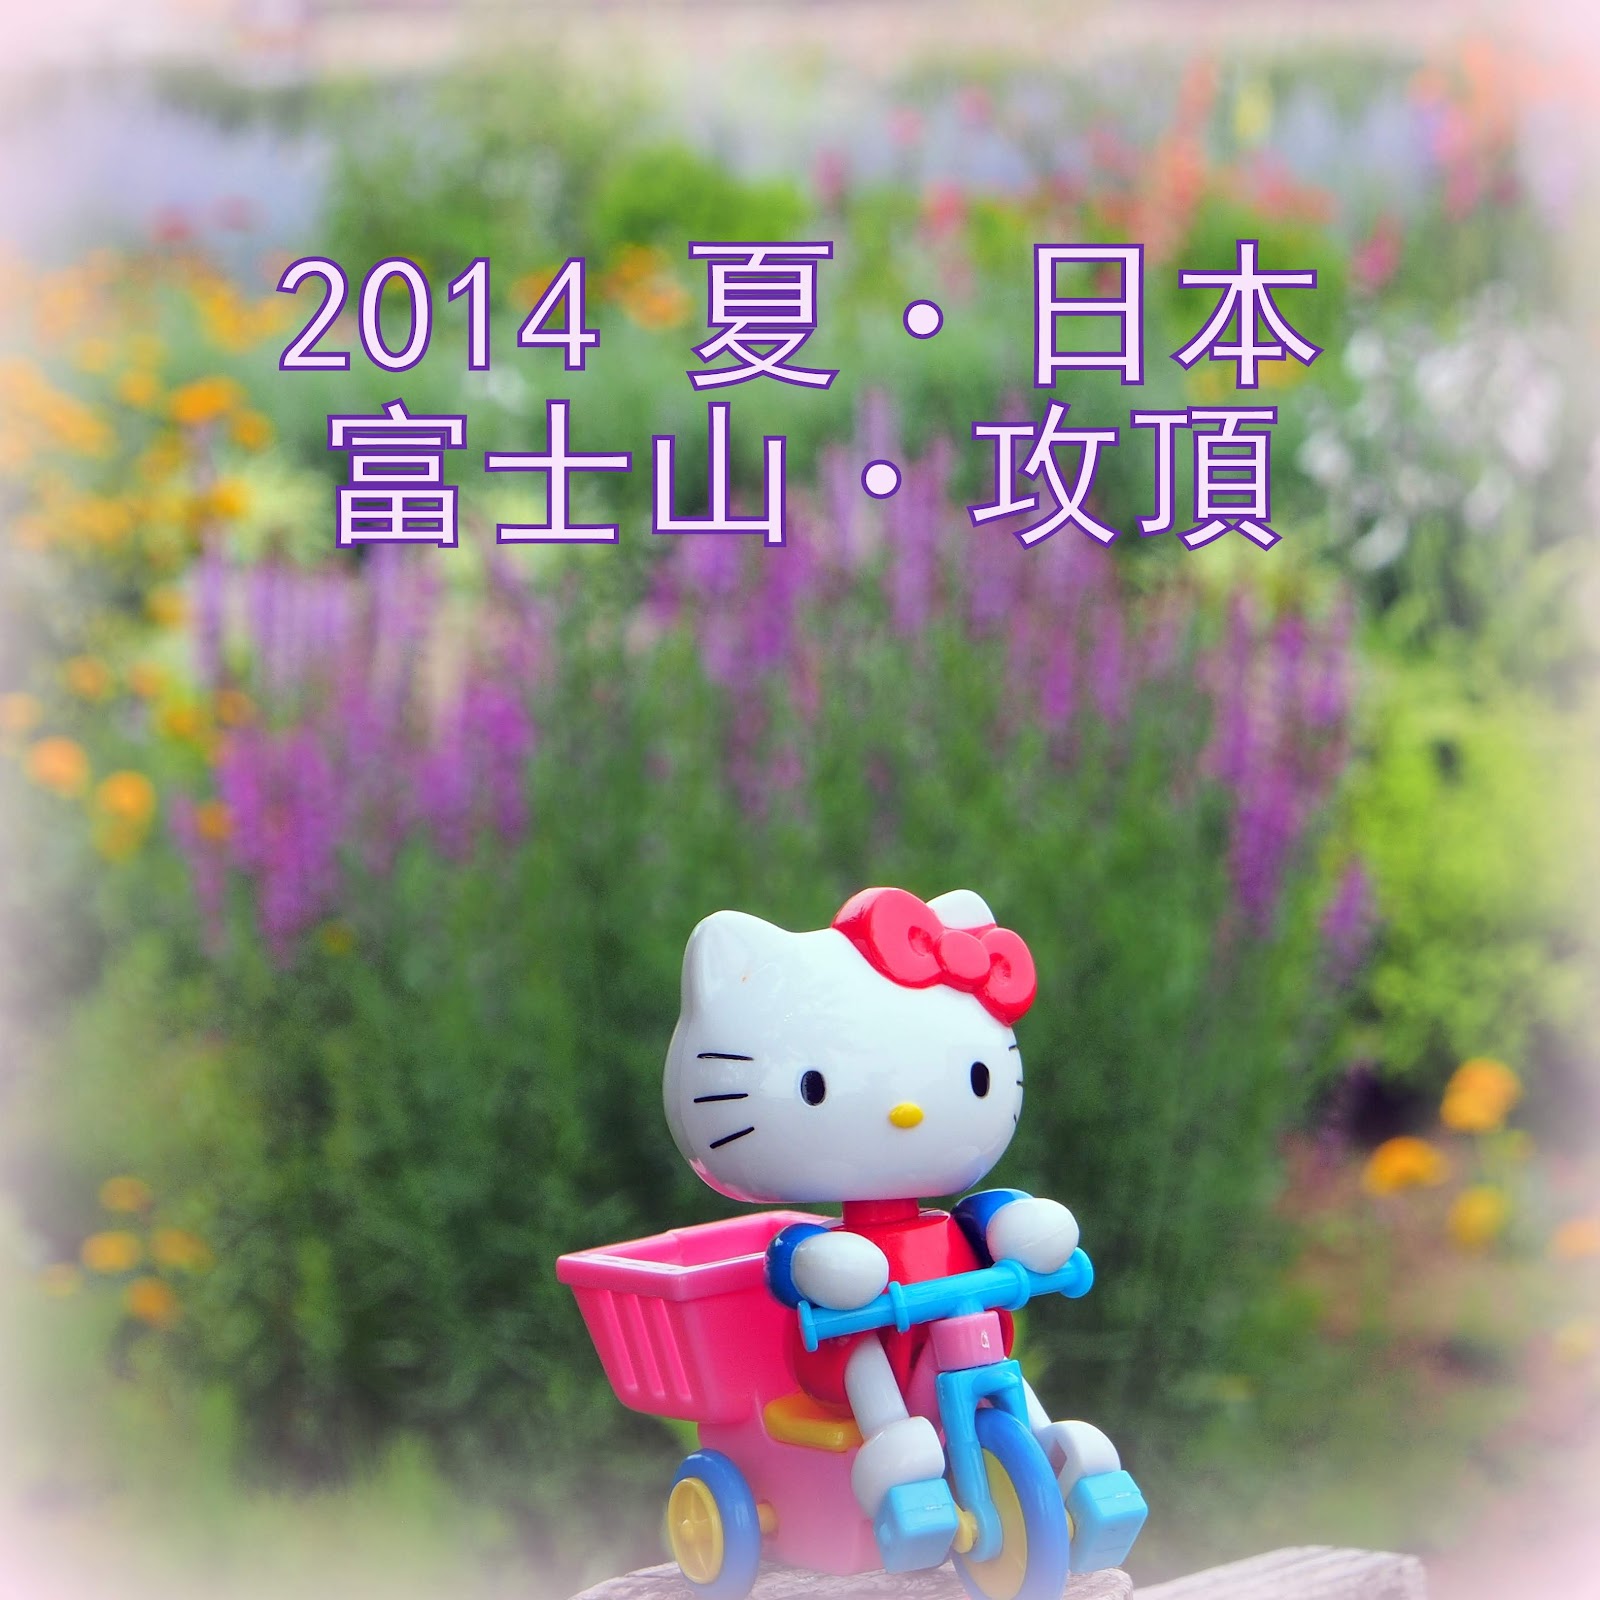 http://ivytao.blogspot.hk/2014/07/2014_31.html